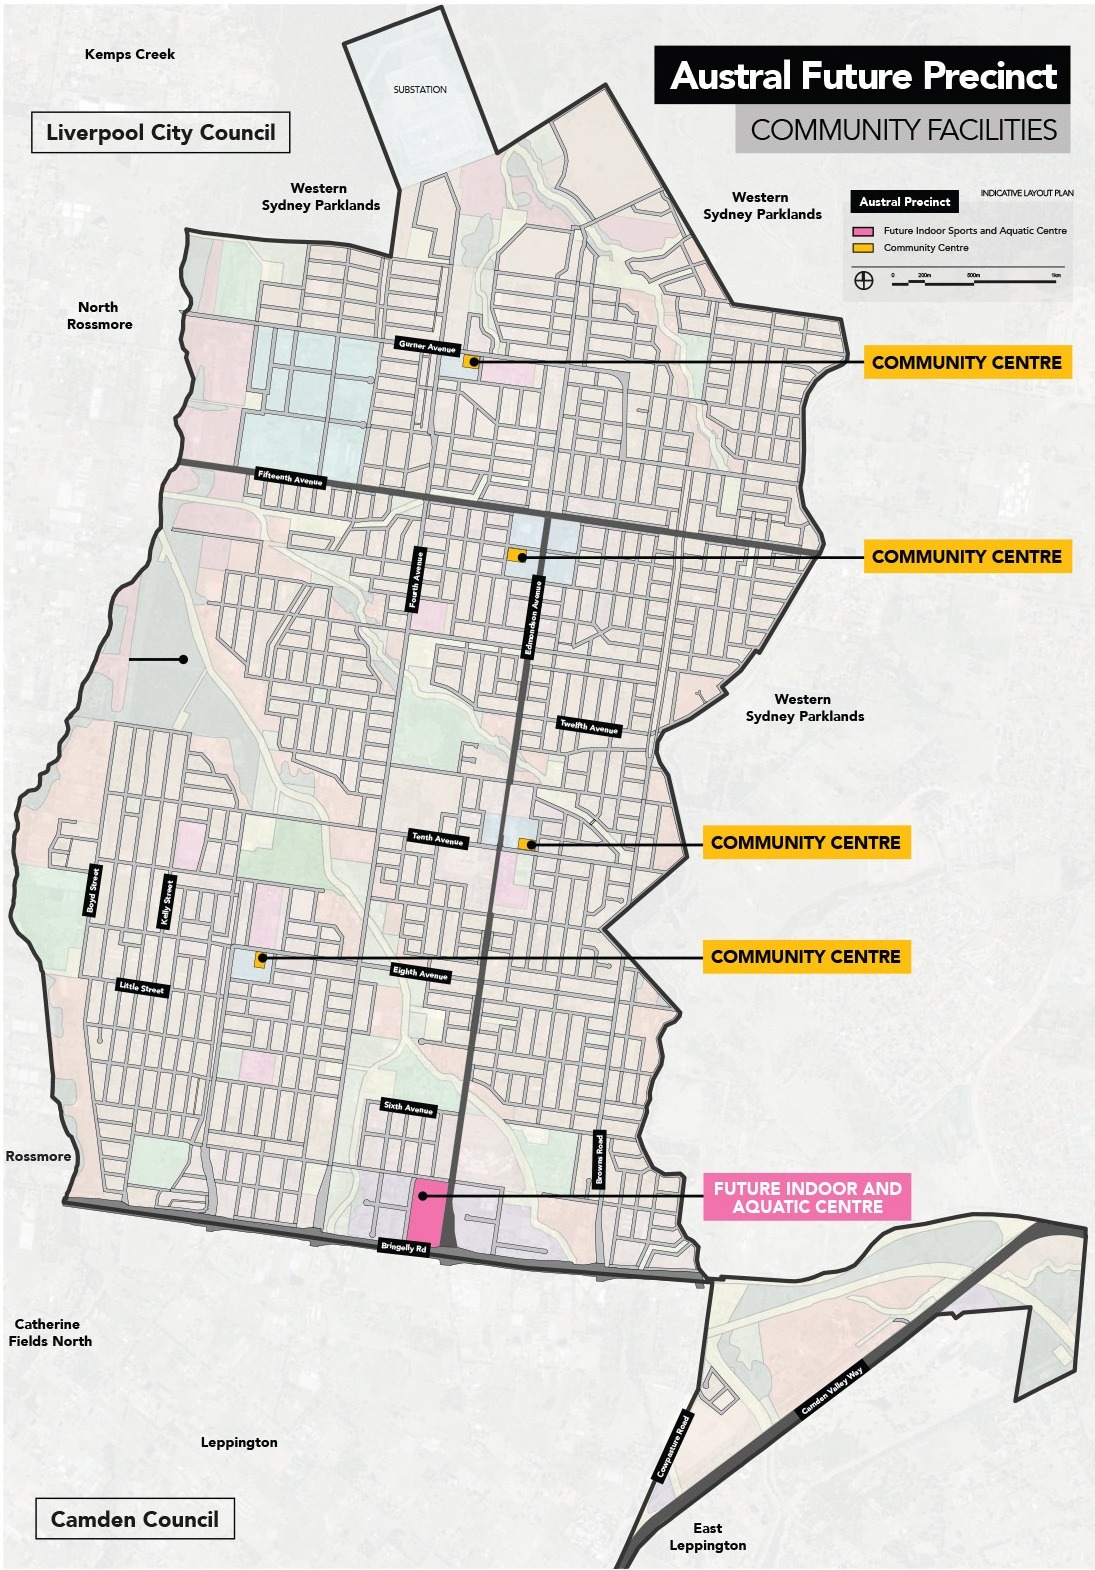 Austral Future Precinct- Community Facilities